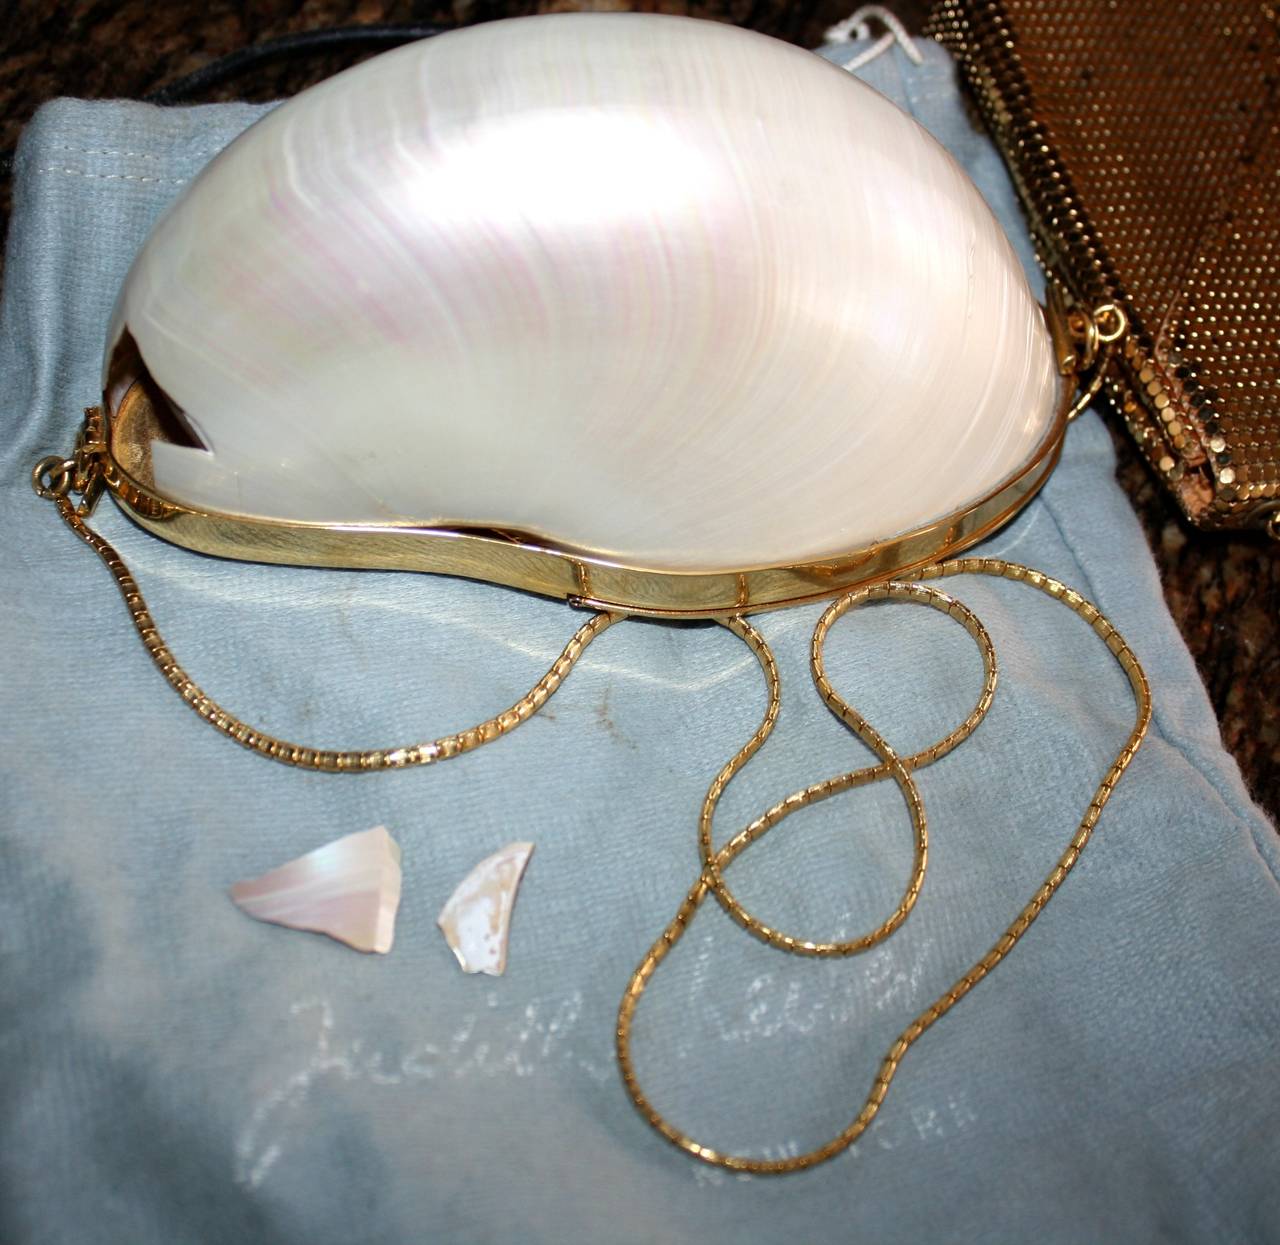 Rare Vintage Judith Leiber Seashell Minaudière Purse w/ Convertible Gold Chain 1